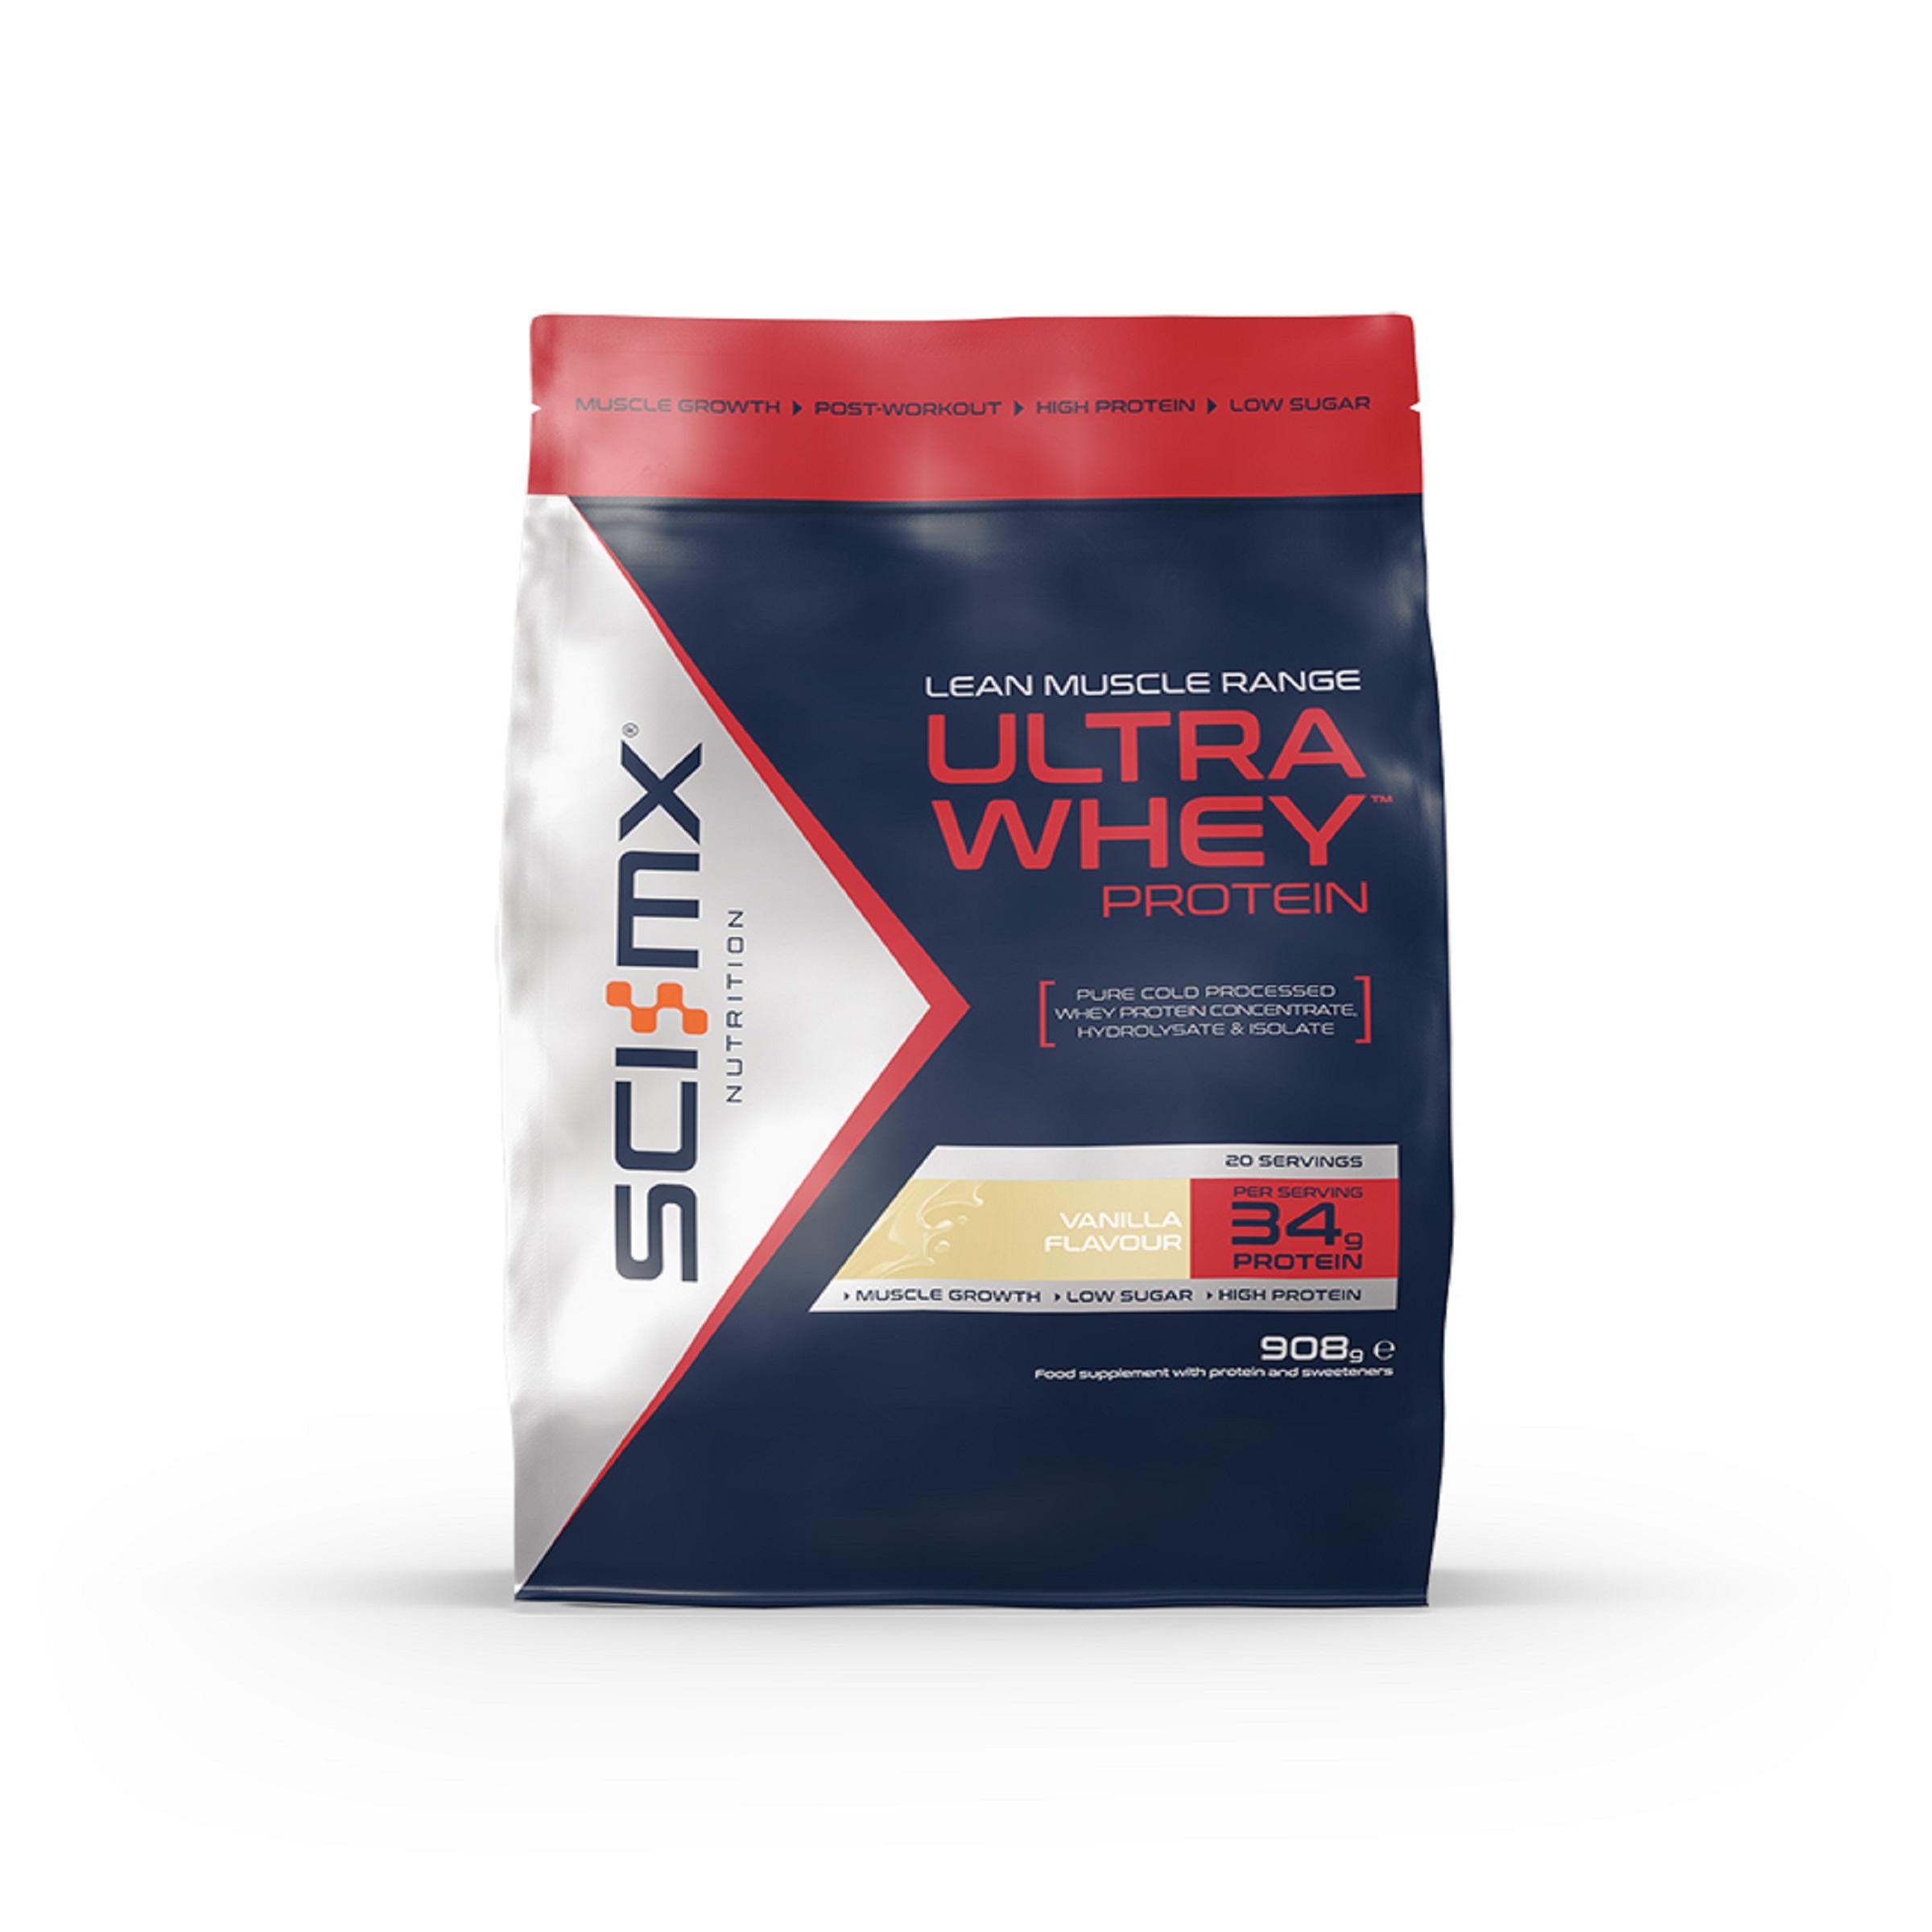 Ultra Whey Protein Shake - 908g 1/1